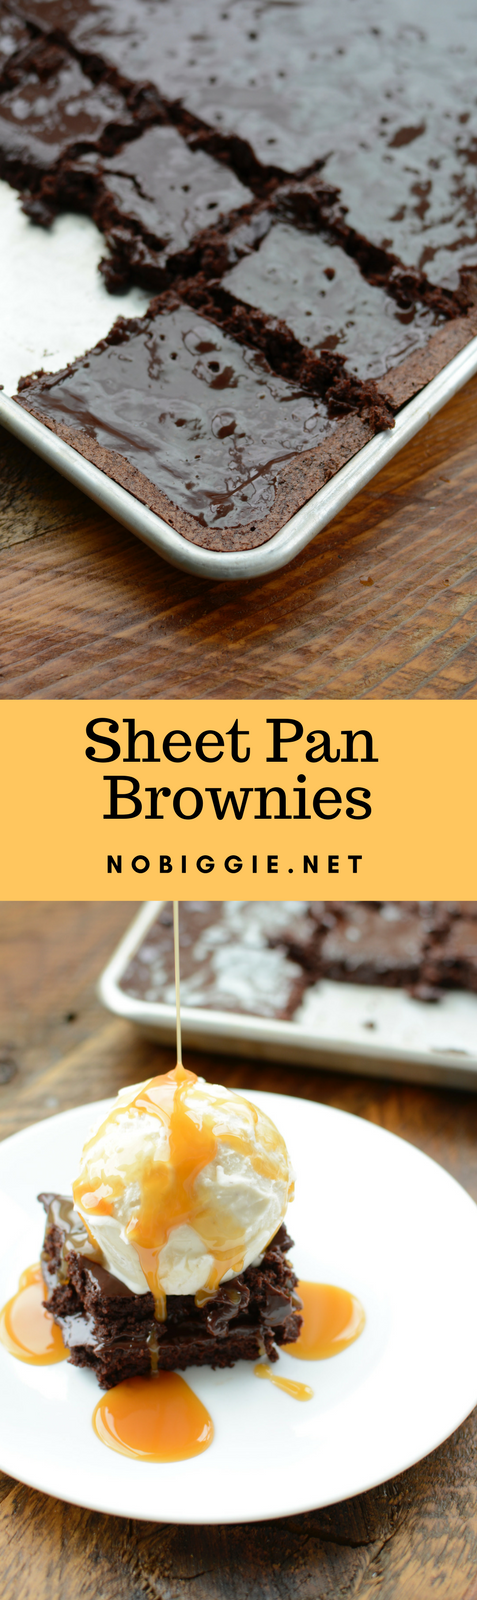 Chocolate Ganache Sheet Pan Brownies | NoBiggie.net